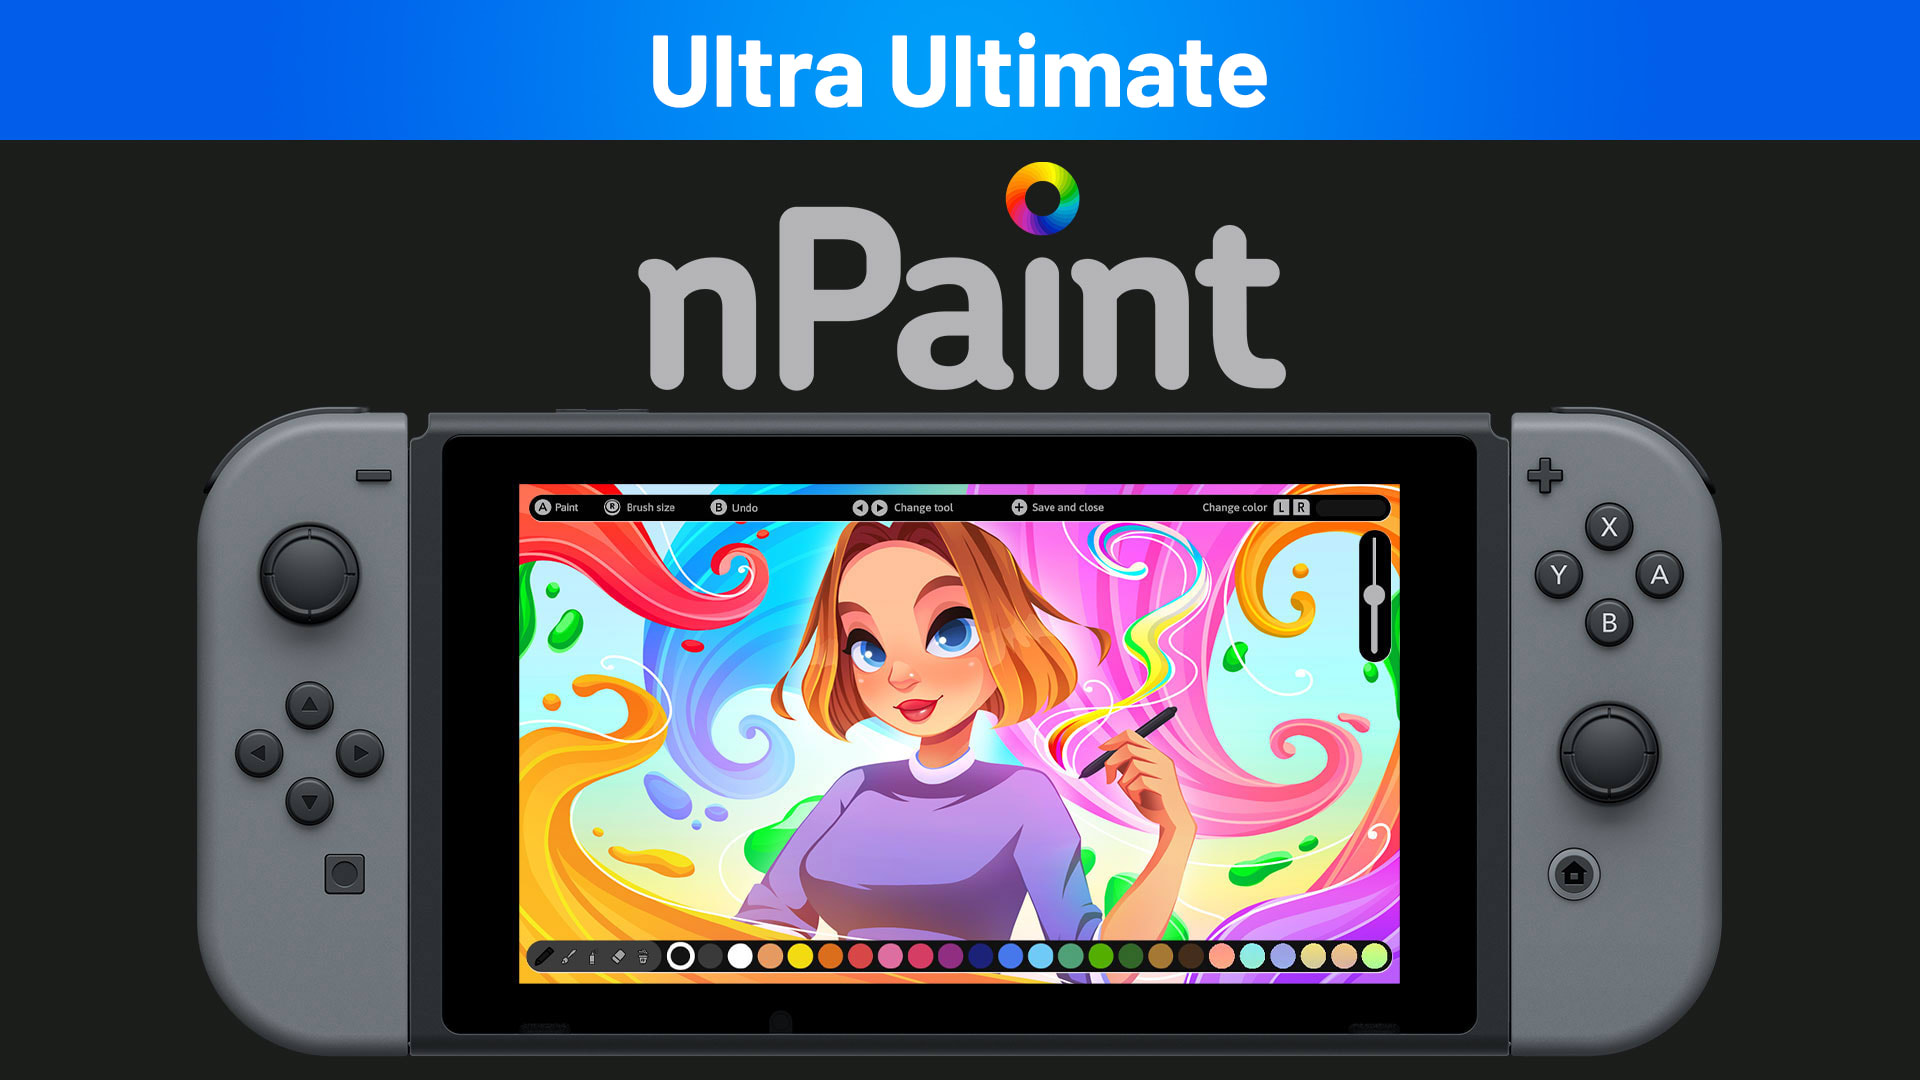 nPaint Ultra Ultimate